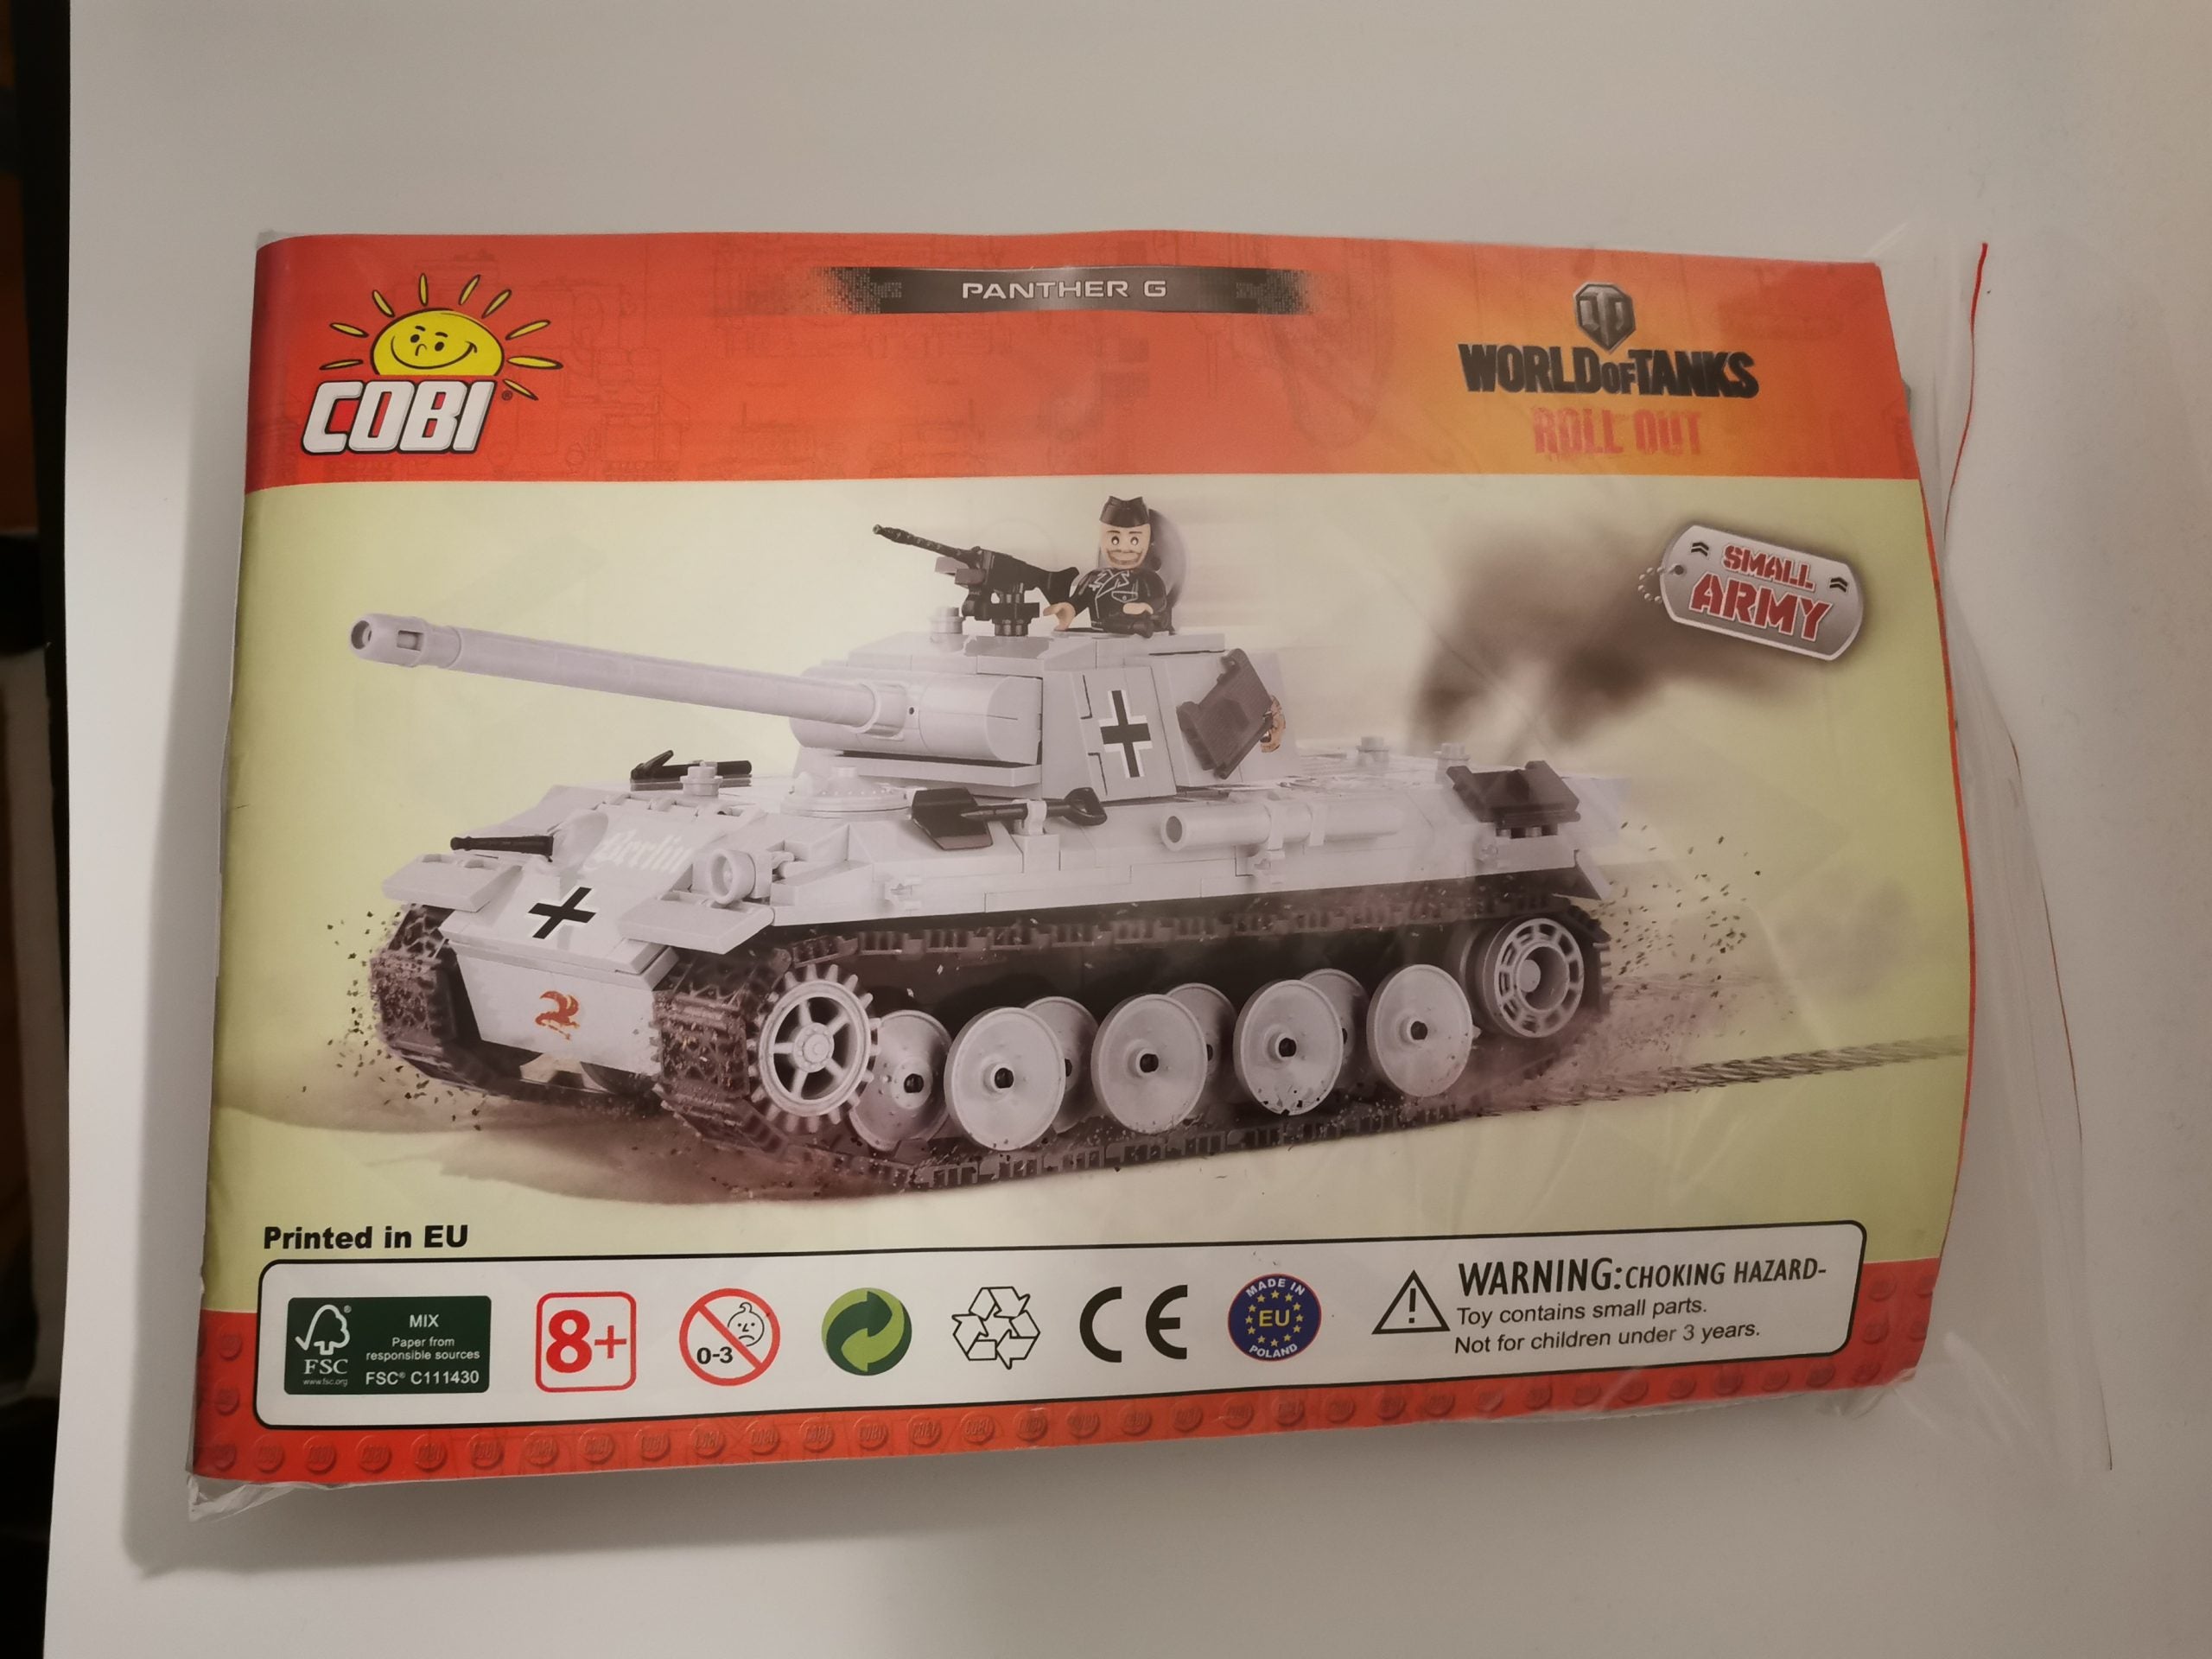 Cobi 3012 Panther G (World of Tanks) used